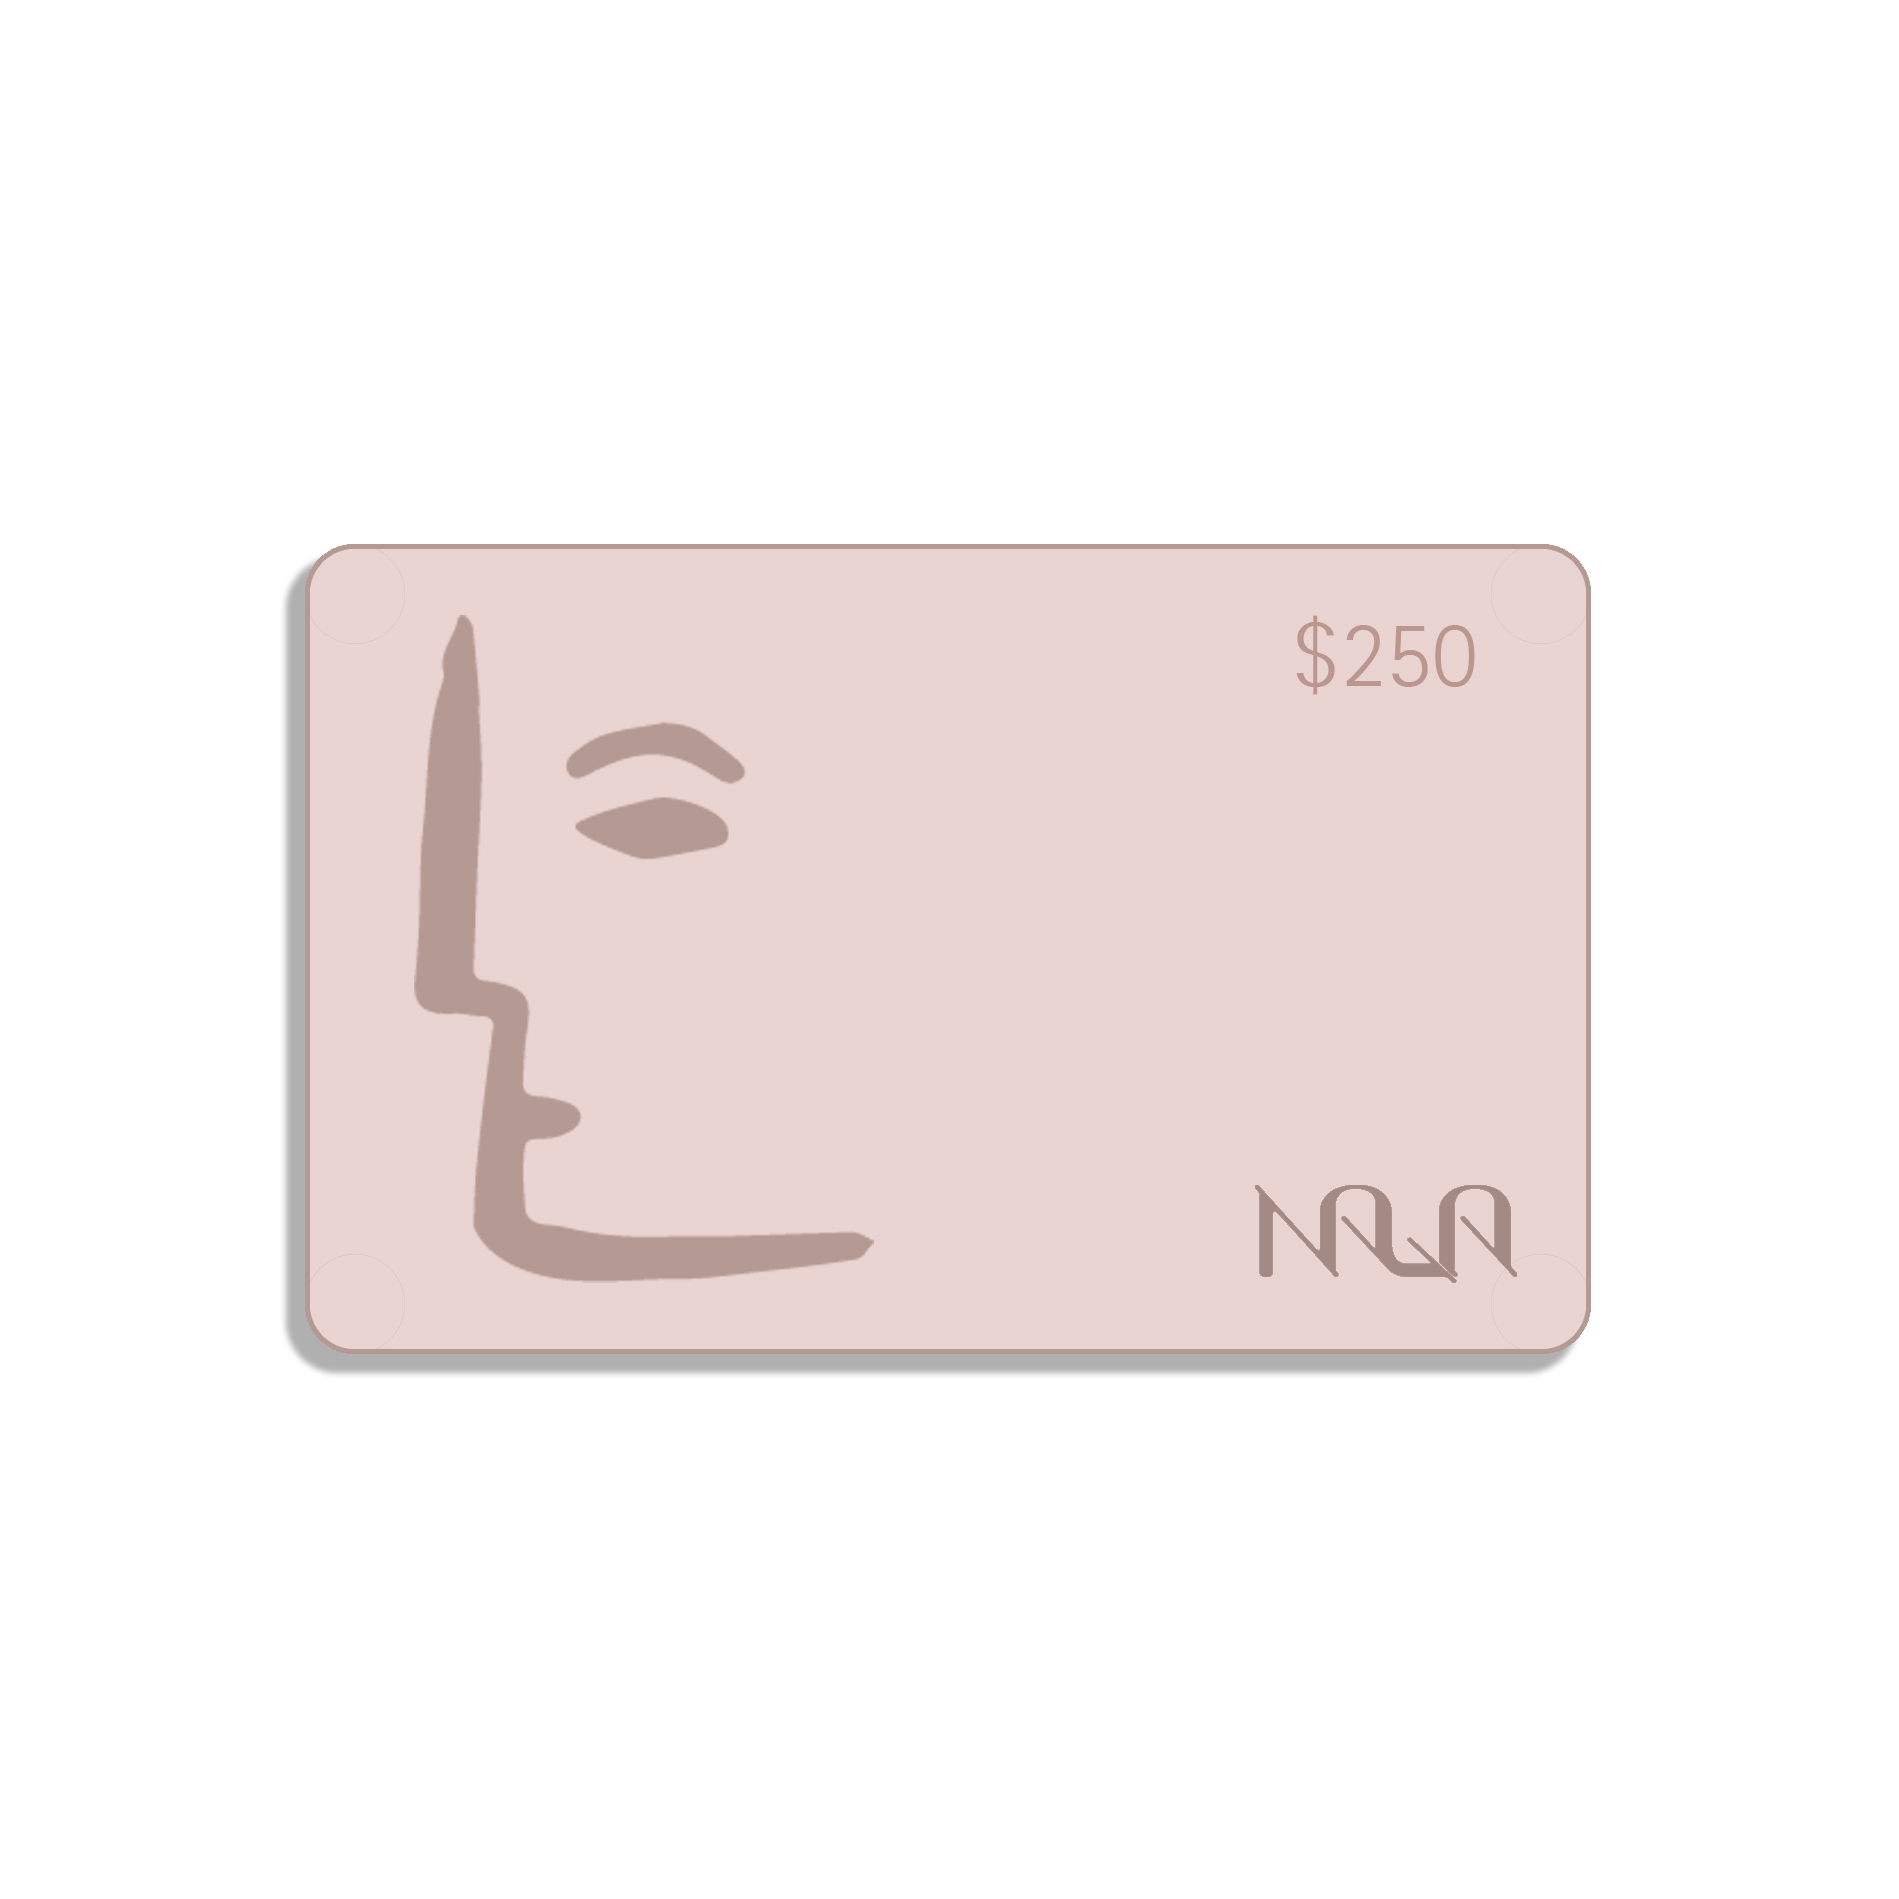 Nala Free-From Skincare Gift Card